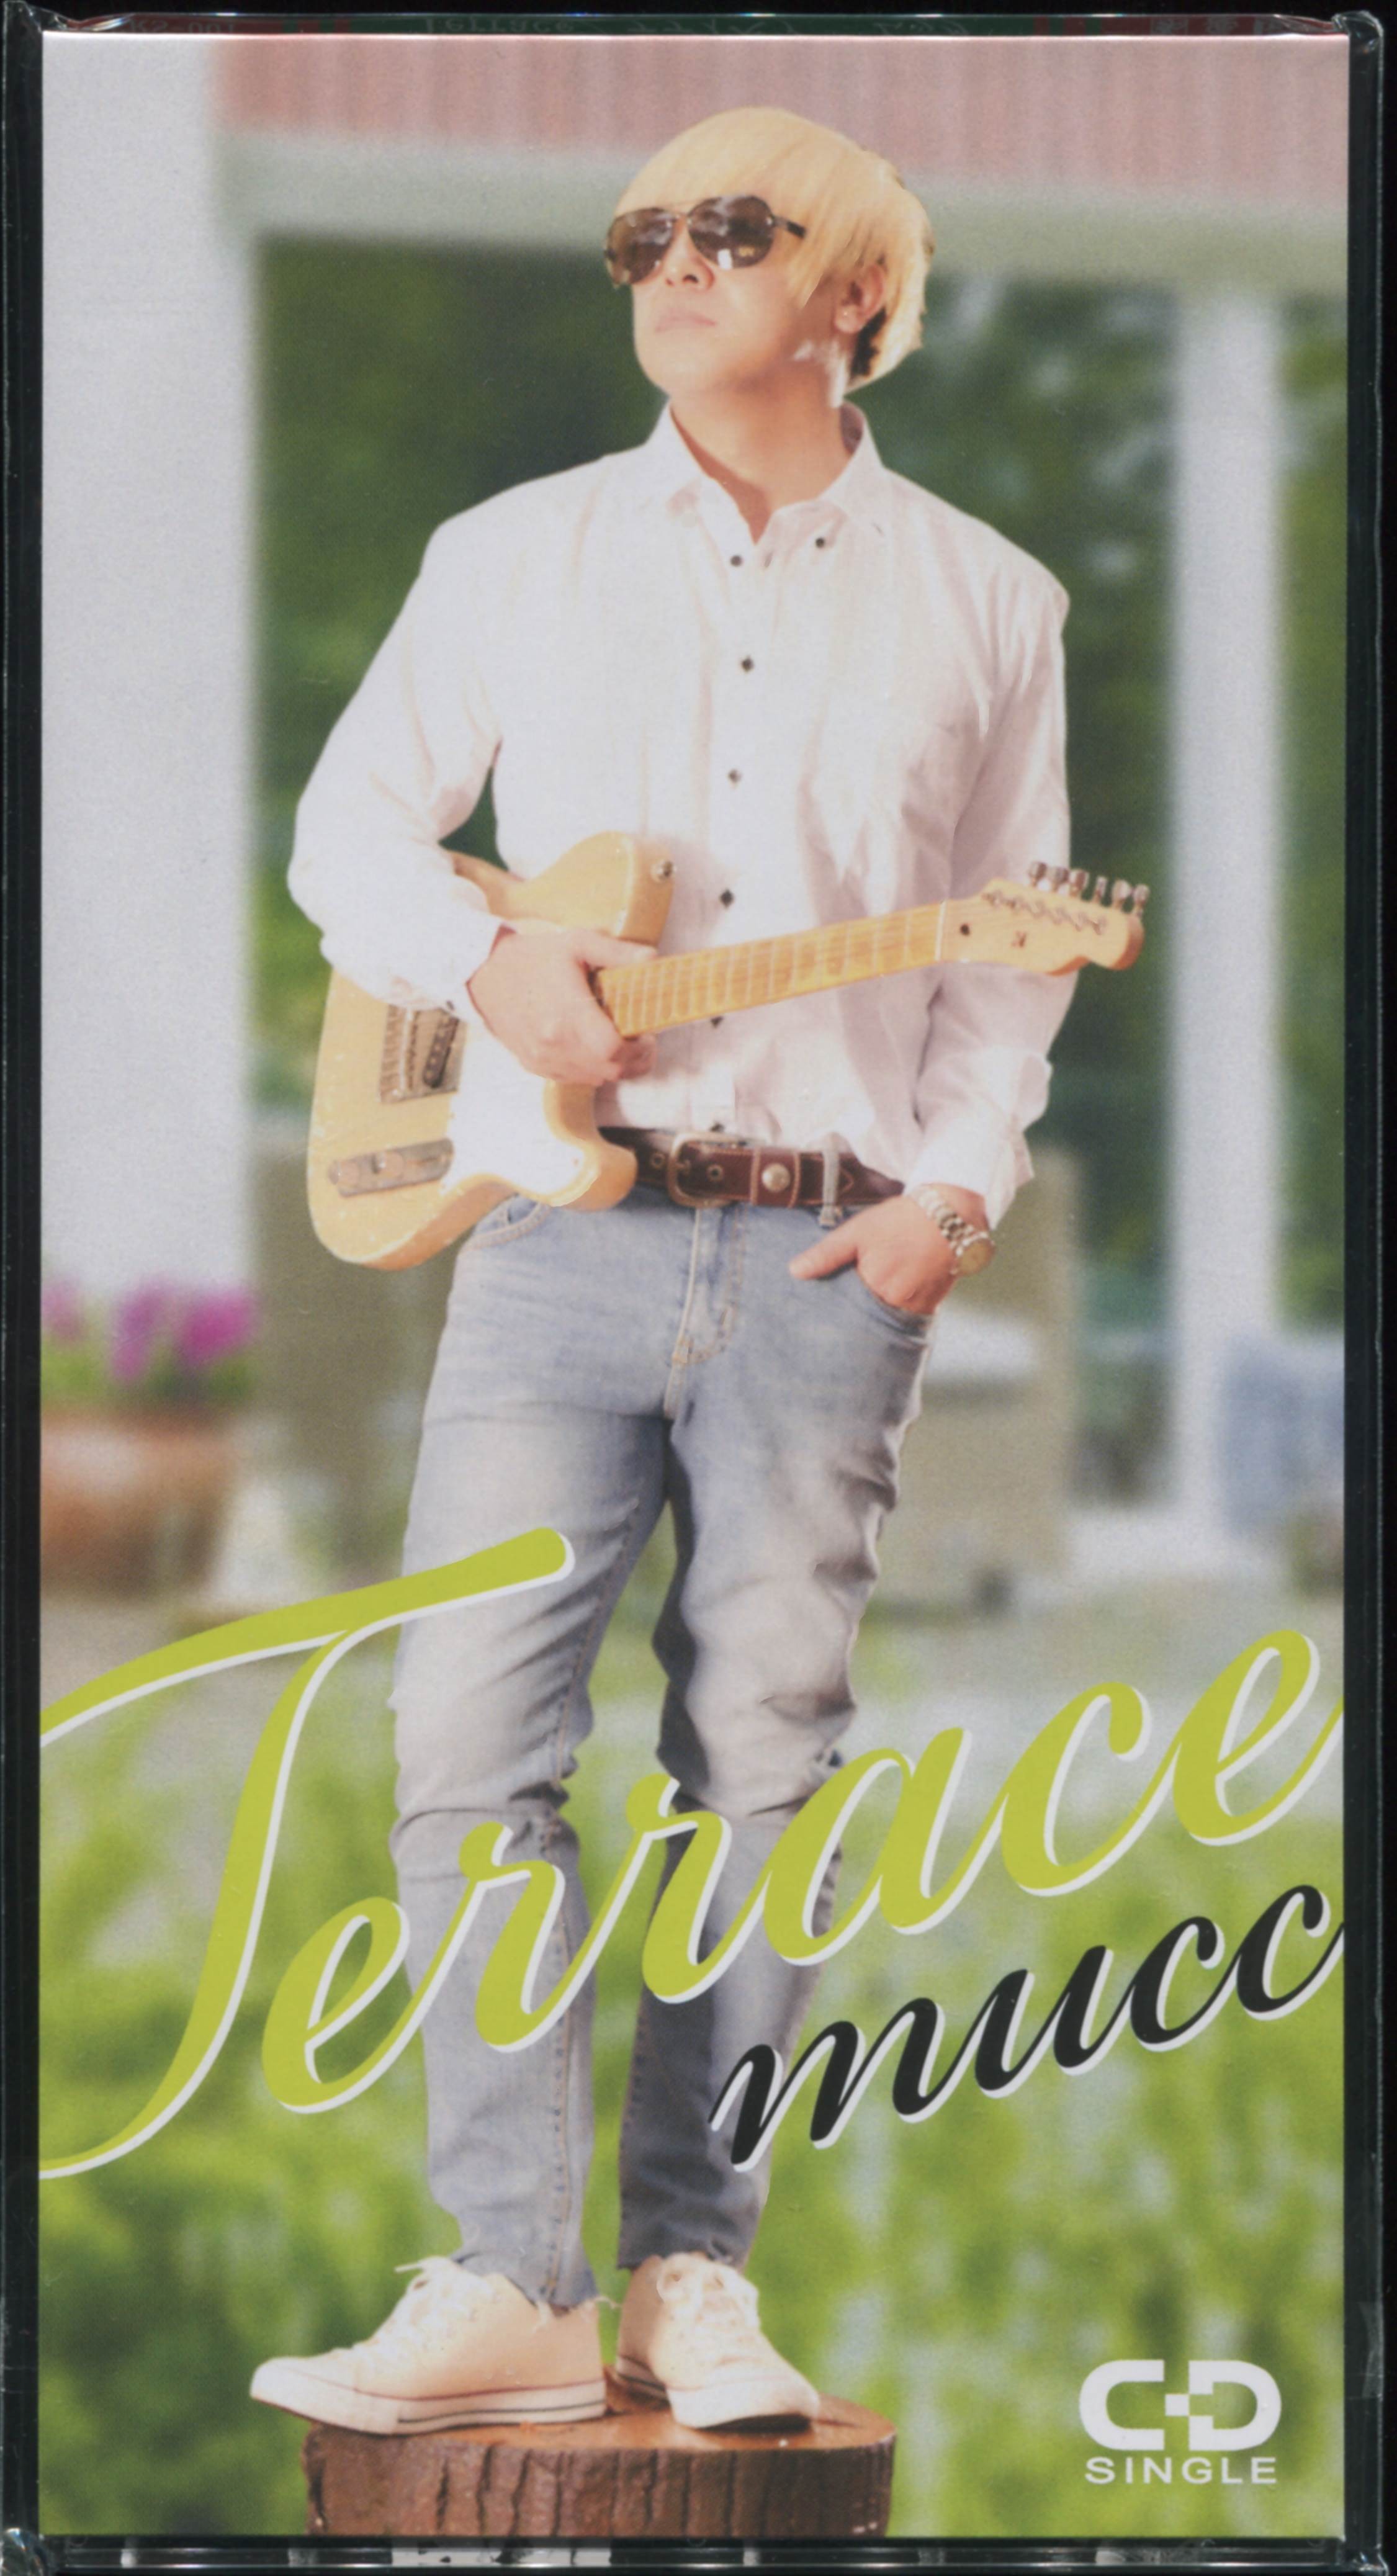 MUCC – Terrace / テディベア [FLAC / CD] [2020.01.10]